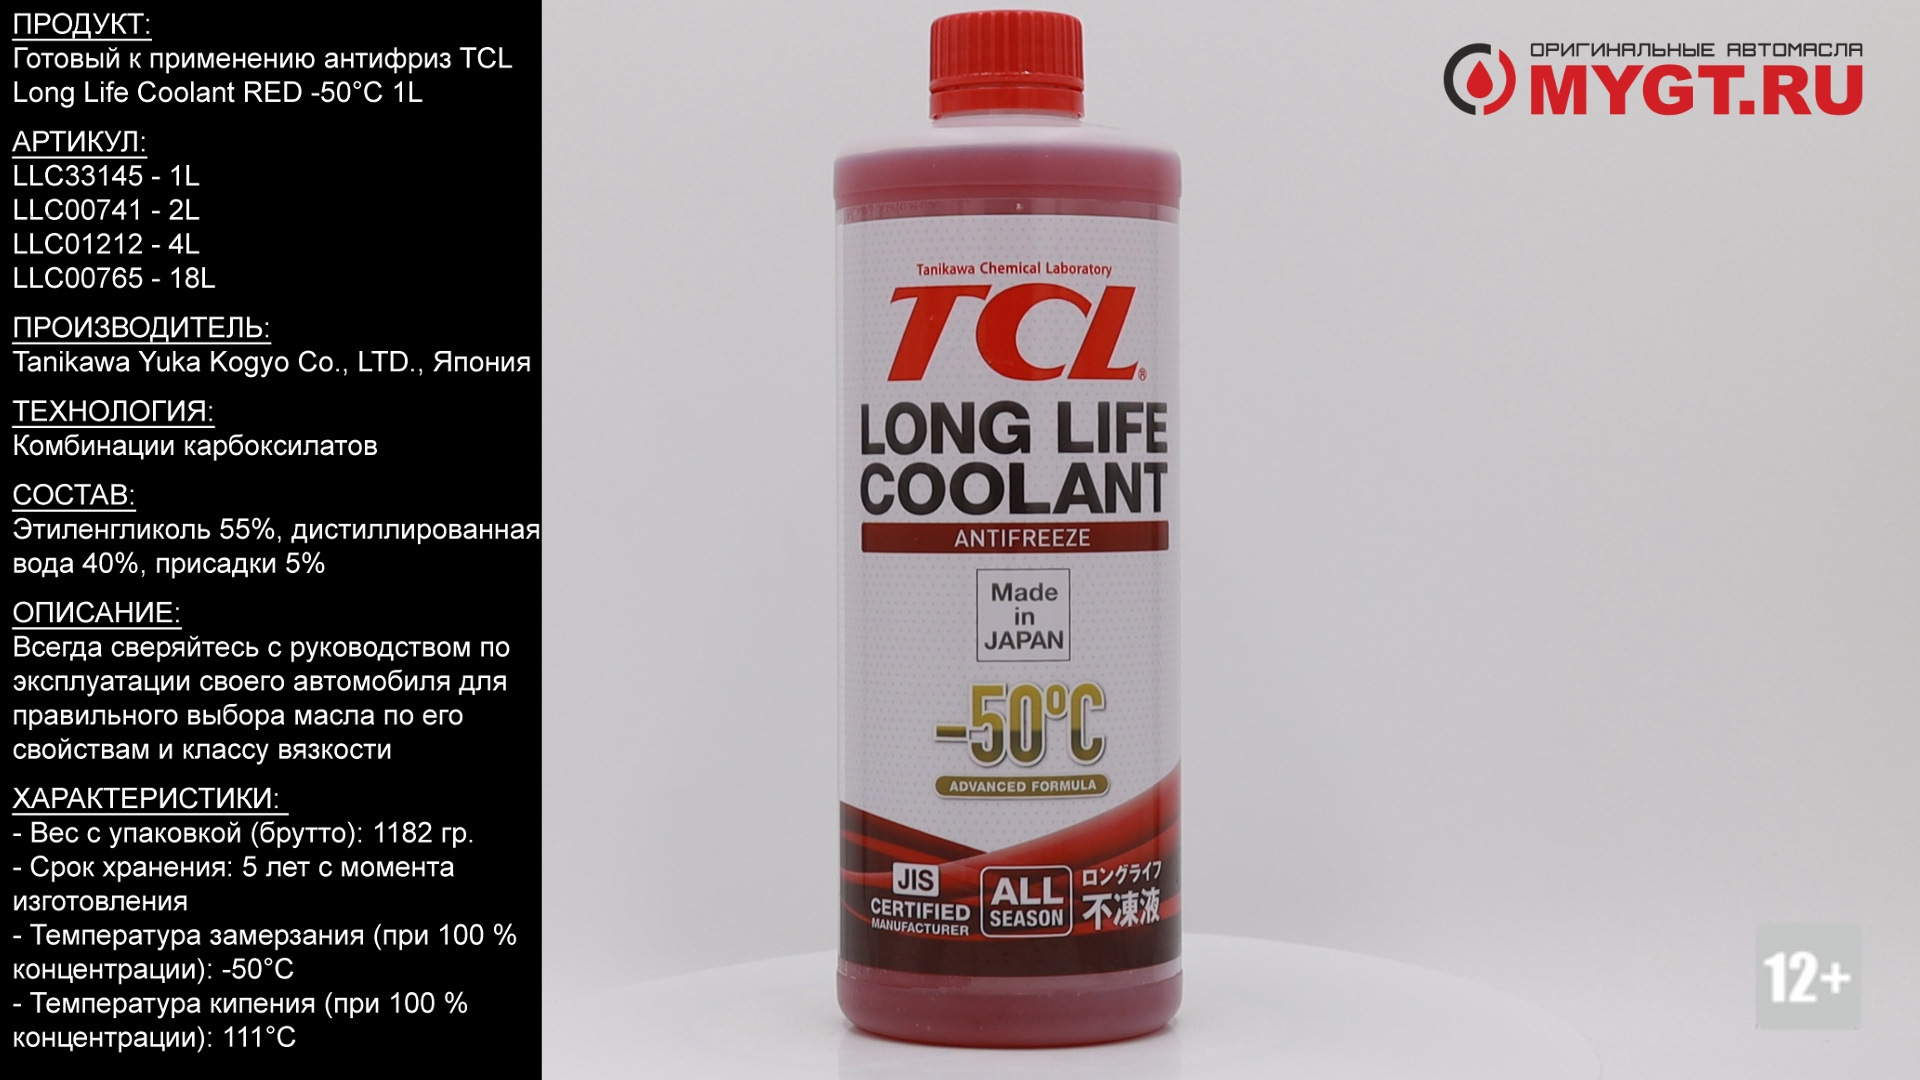 Tcl long life coolant. Антифриз TCL LLC Red -50. Антифриз LLC -50c Red (llc0765). Антифриз TCL красный -50. Антифриз TCL long Life Coolant -40 c.